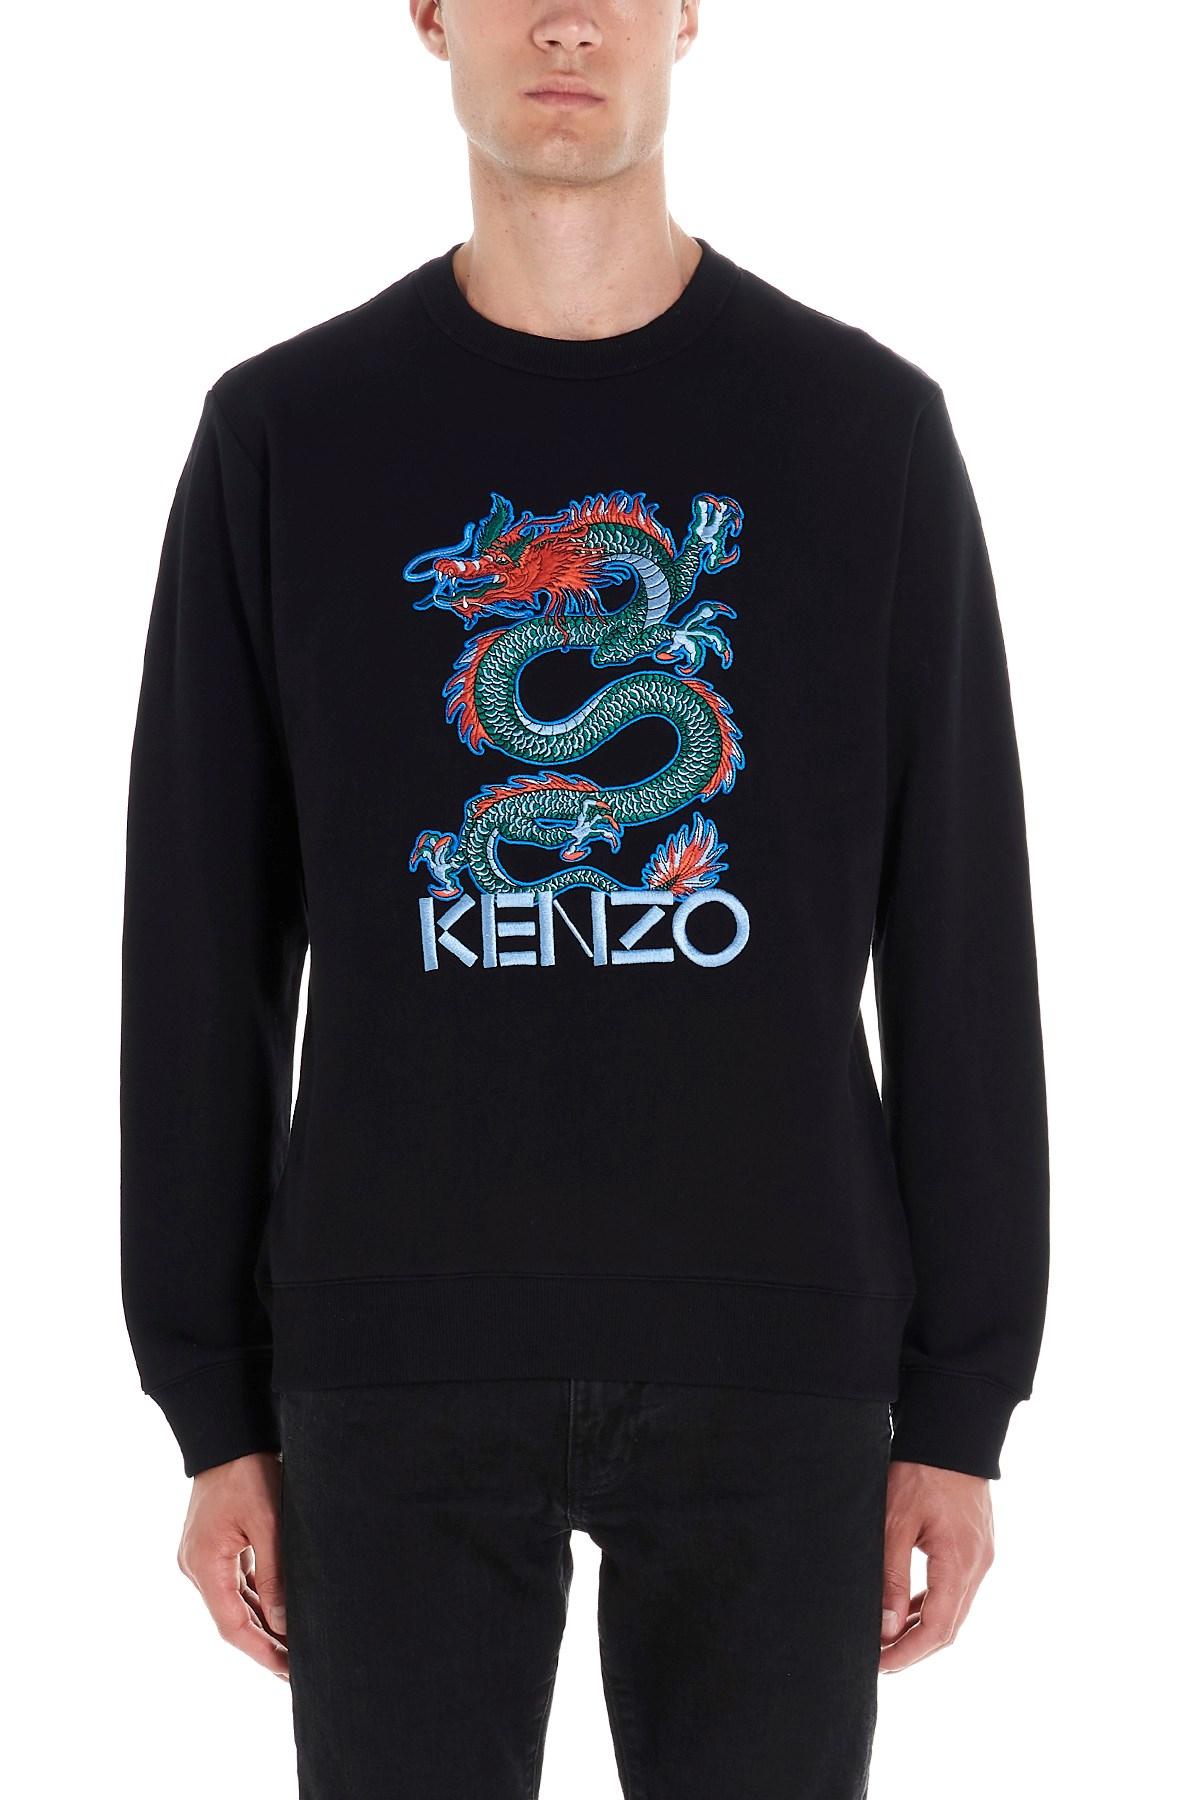 KENZO 'dragon' Sweatshirt in Black for 